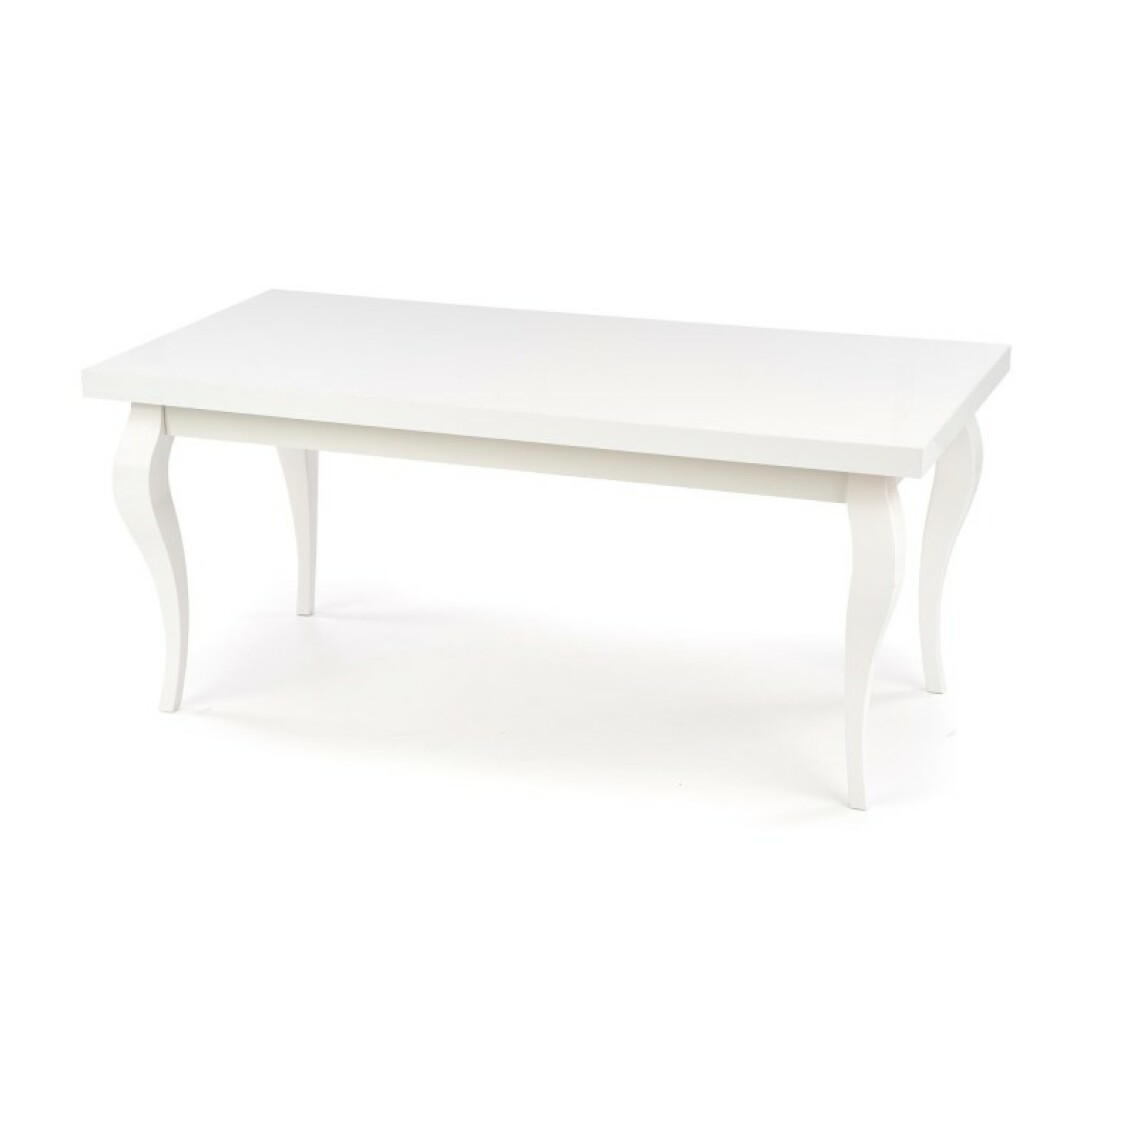 Carellia - Table basse 120 cm x 60 cm x 53 cm - Blanc - Tables basses